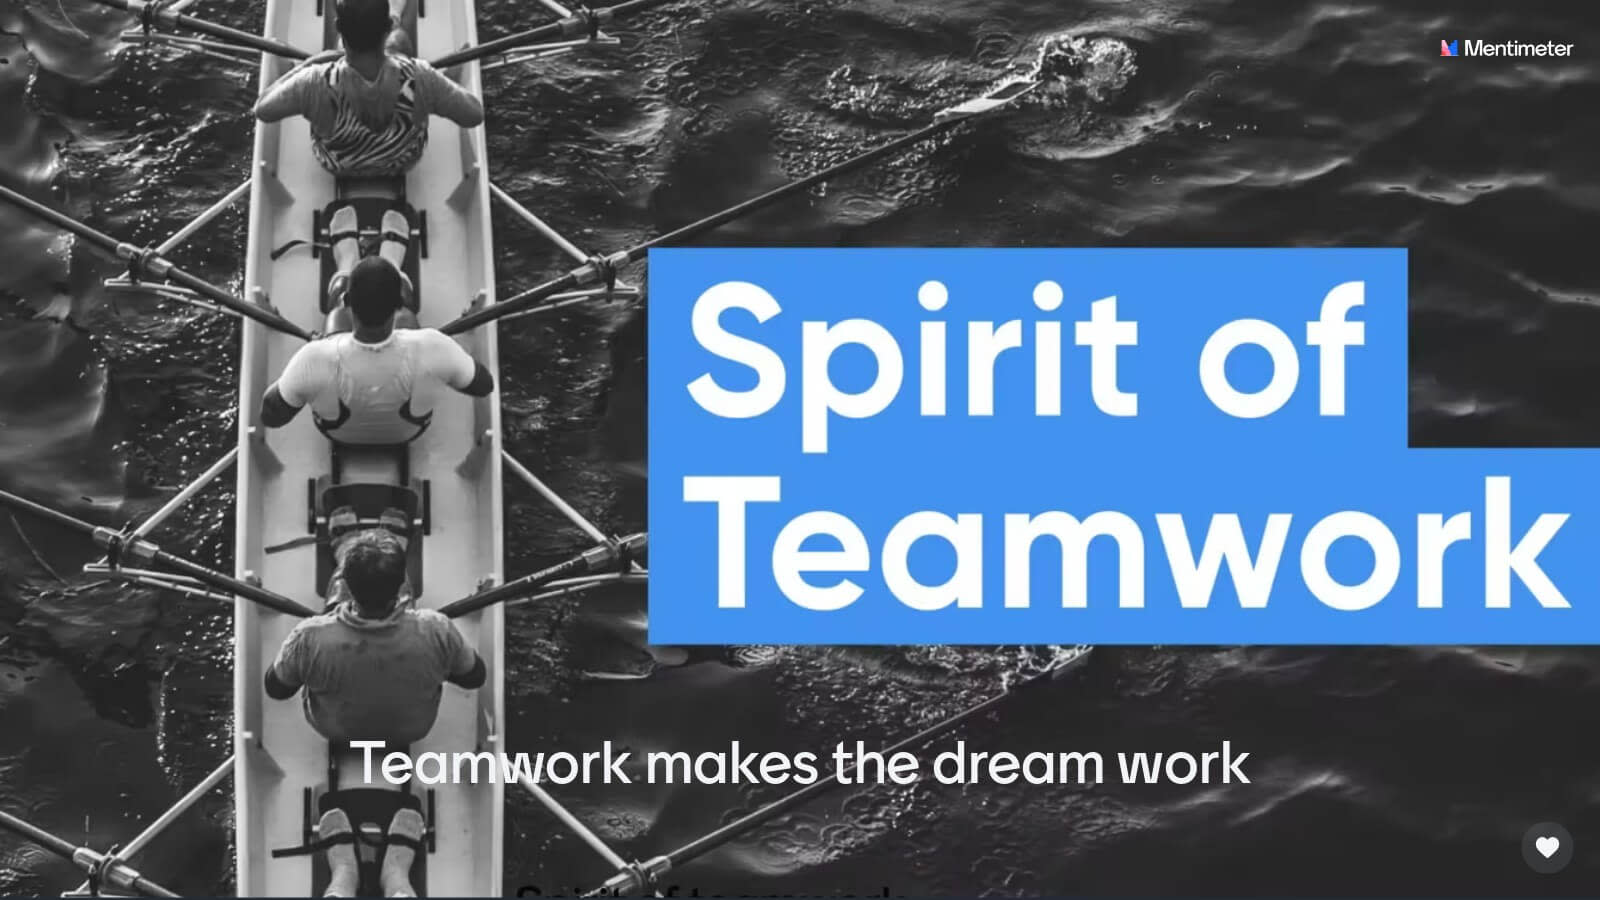 The Spirit of Teamwork